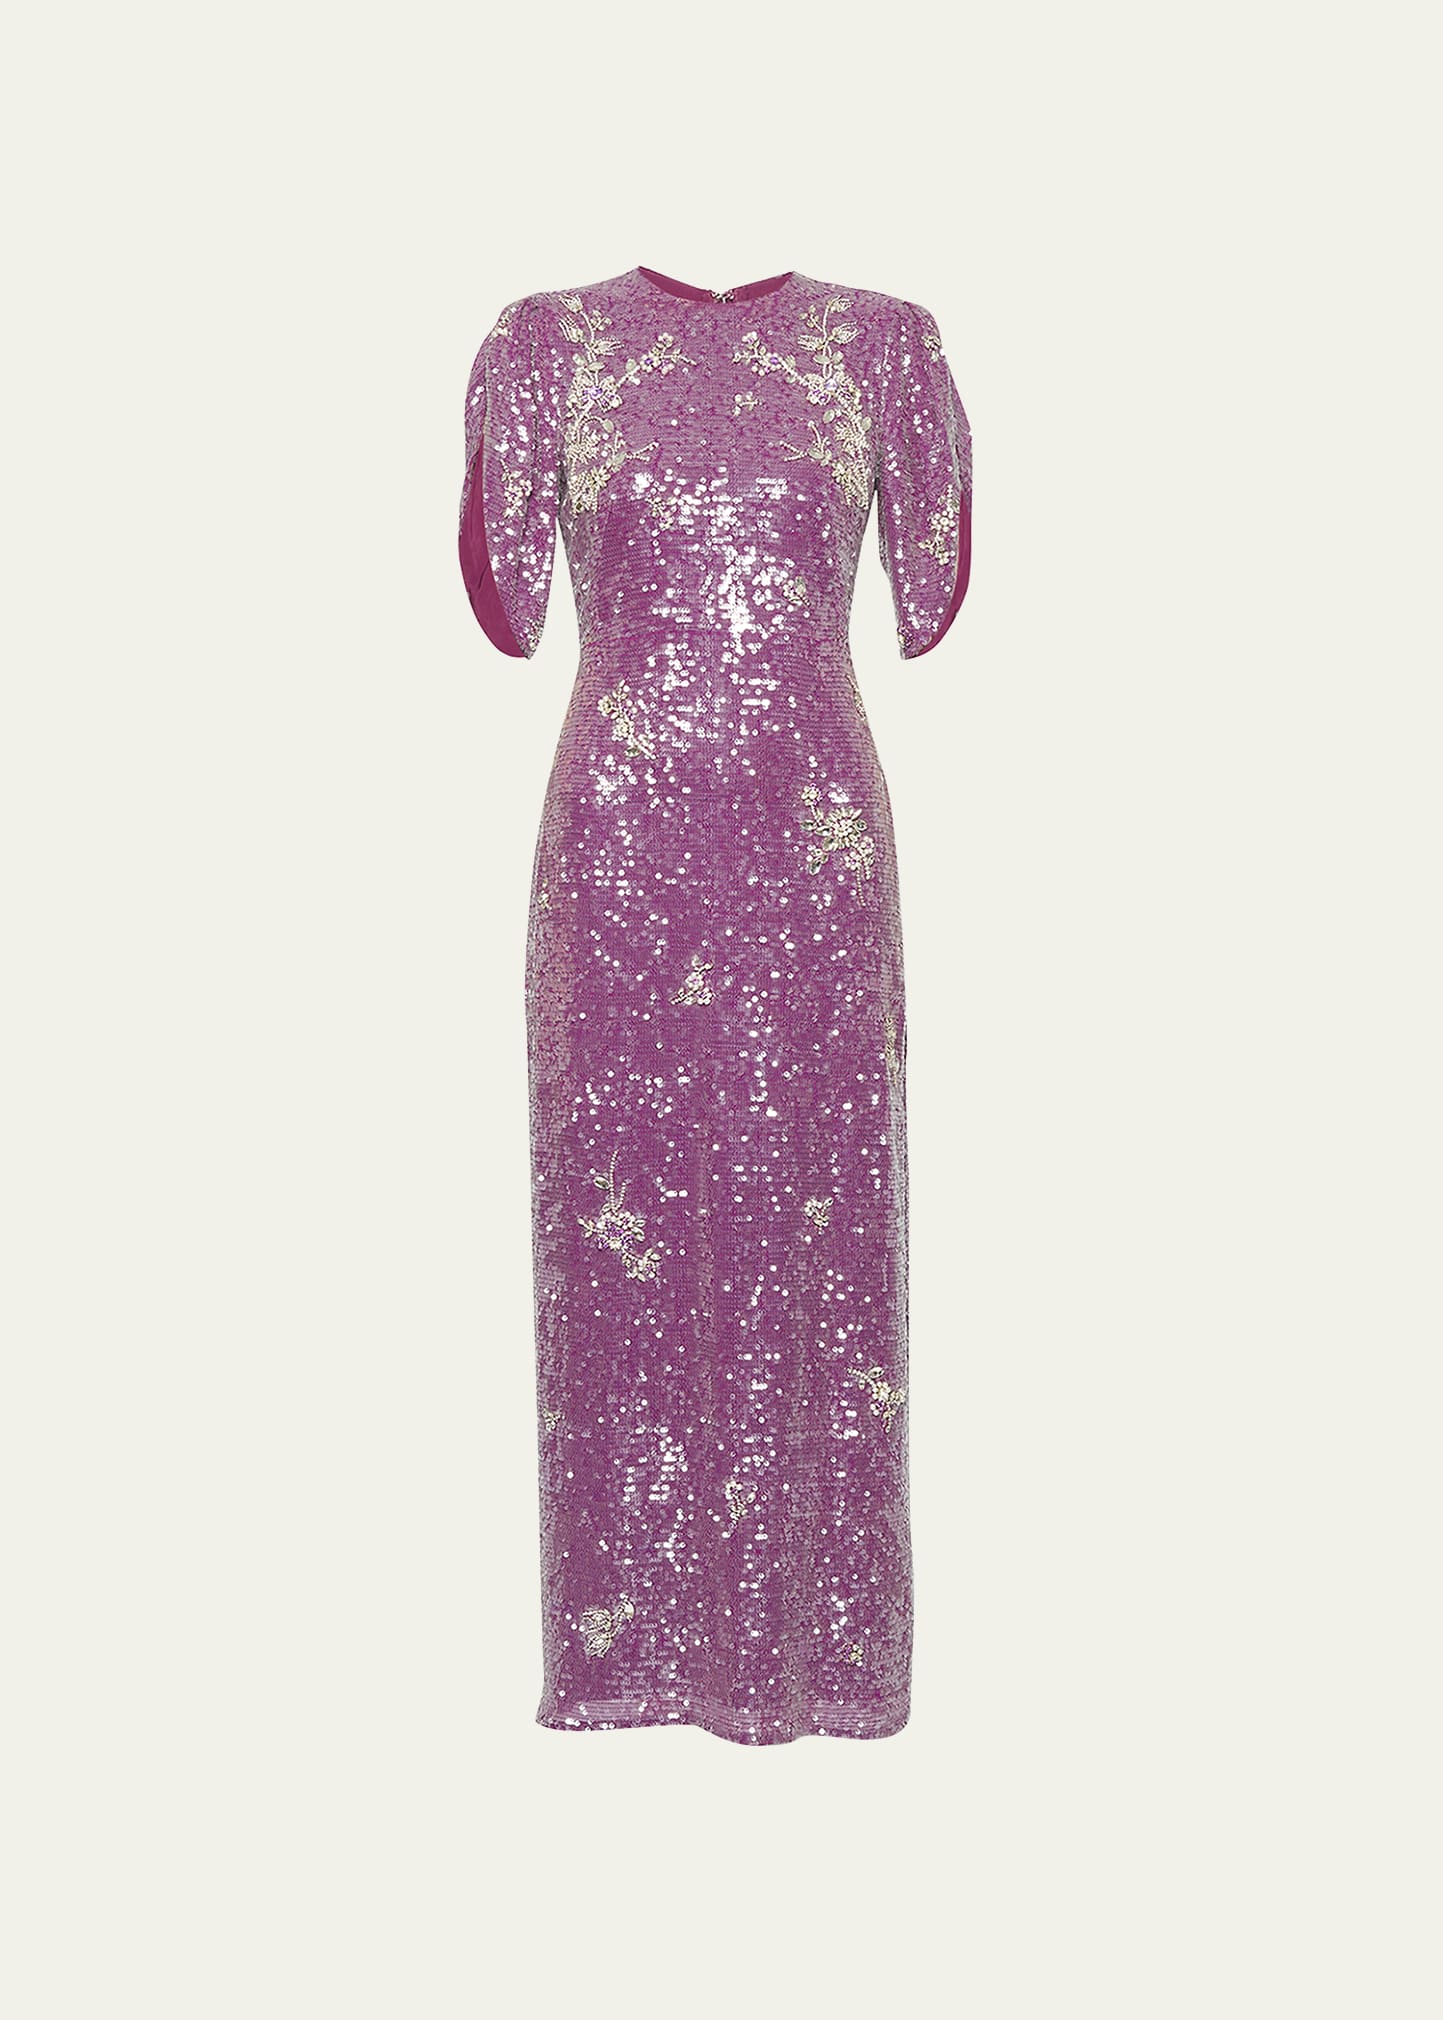 Erdem Sequin-Embellished Beaded Dress - Bergdorf Goodman